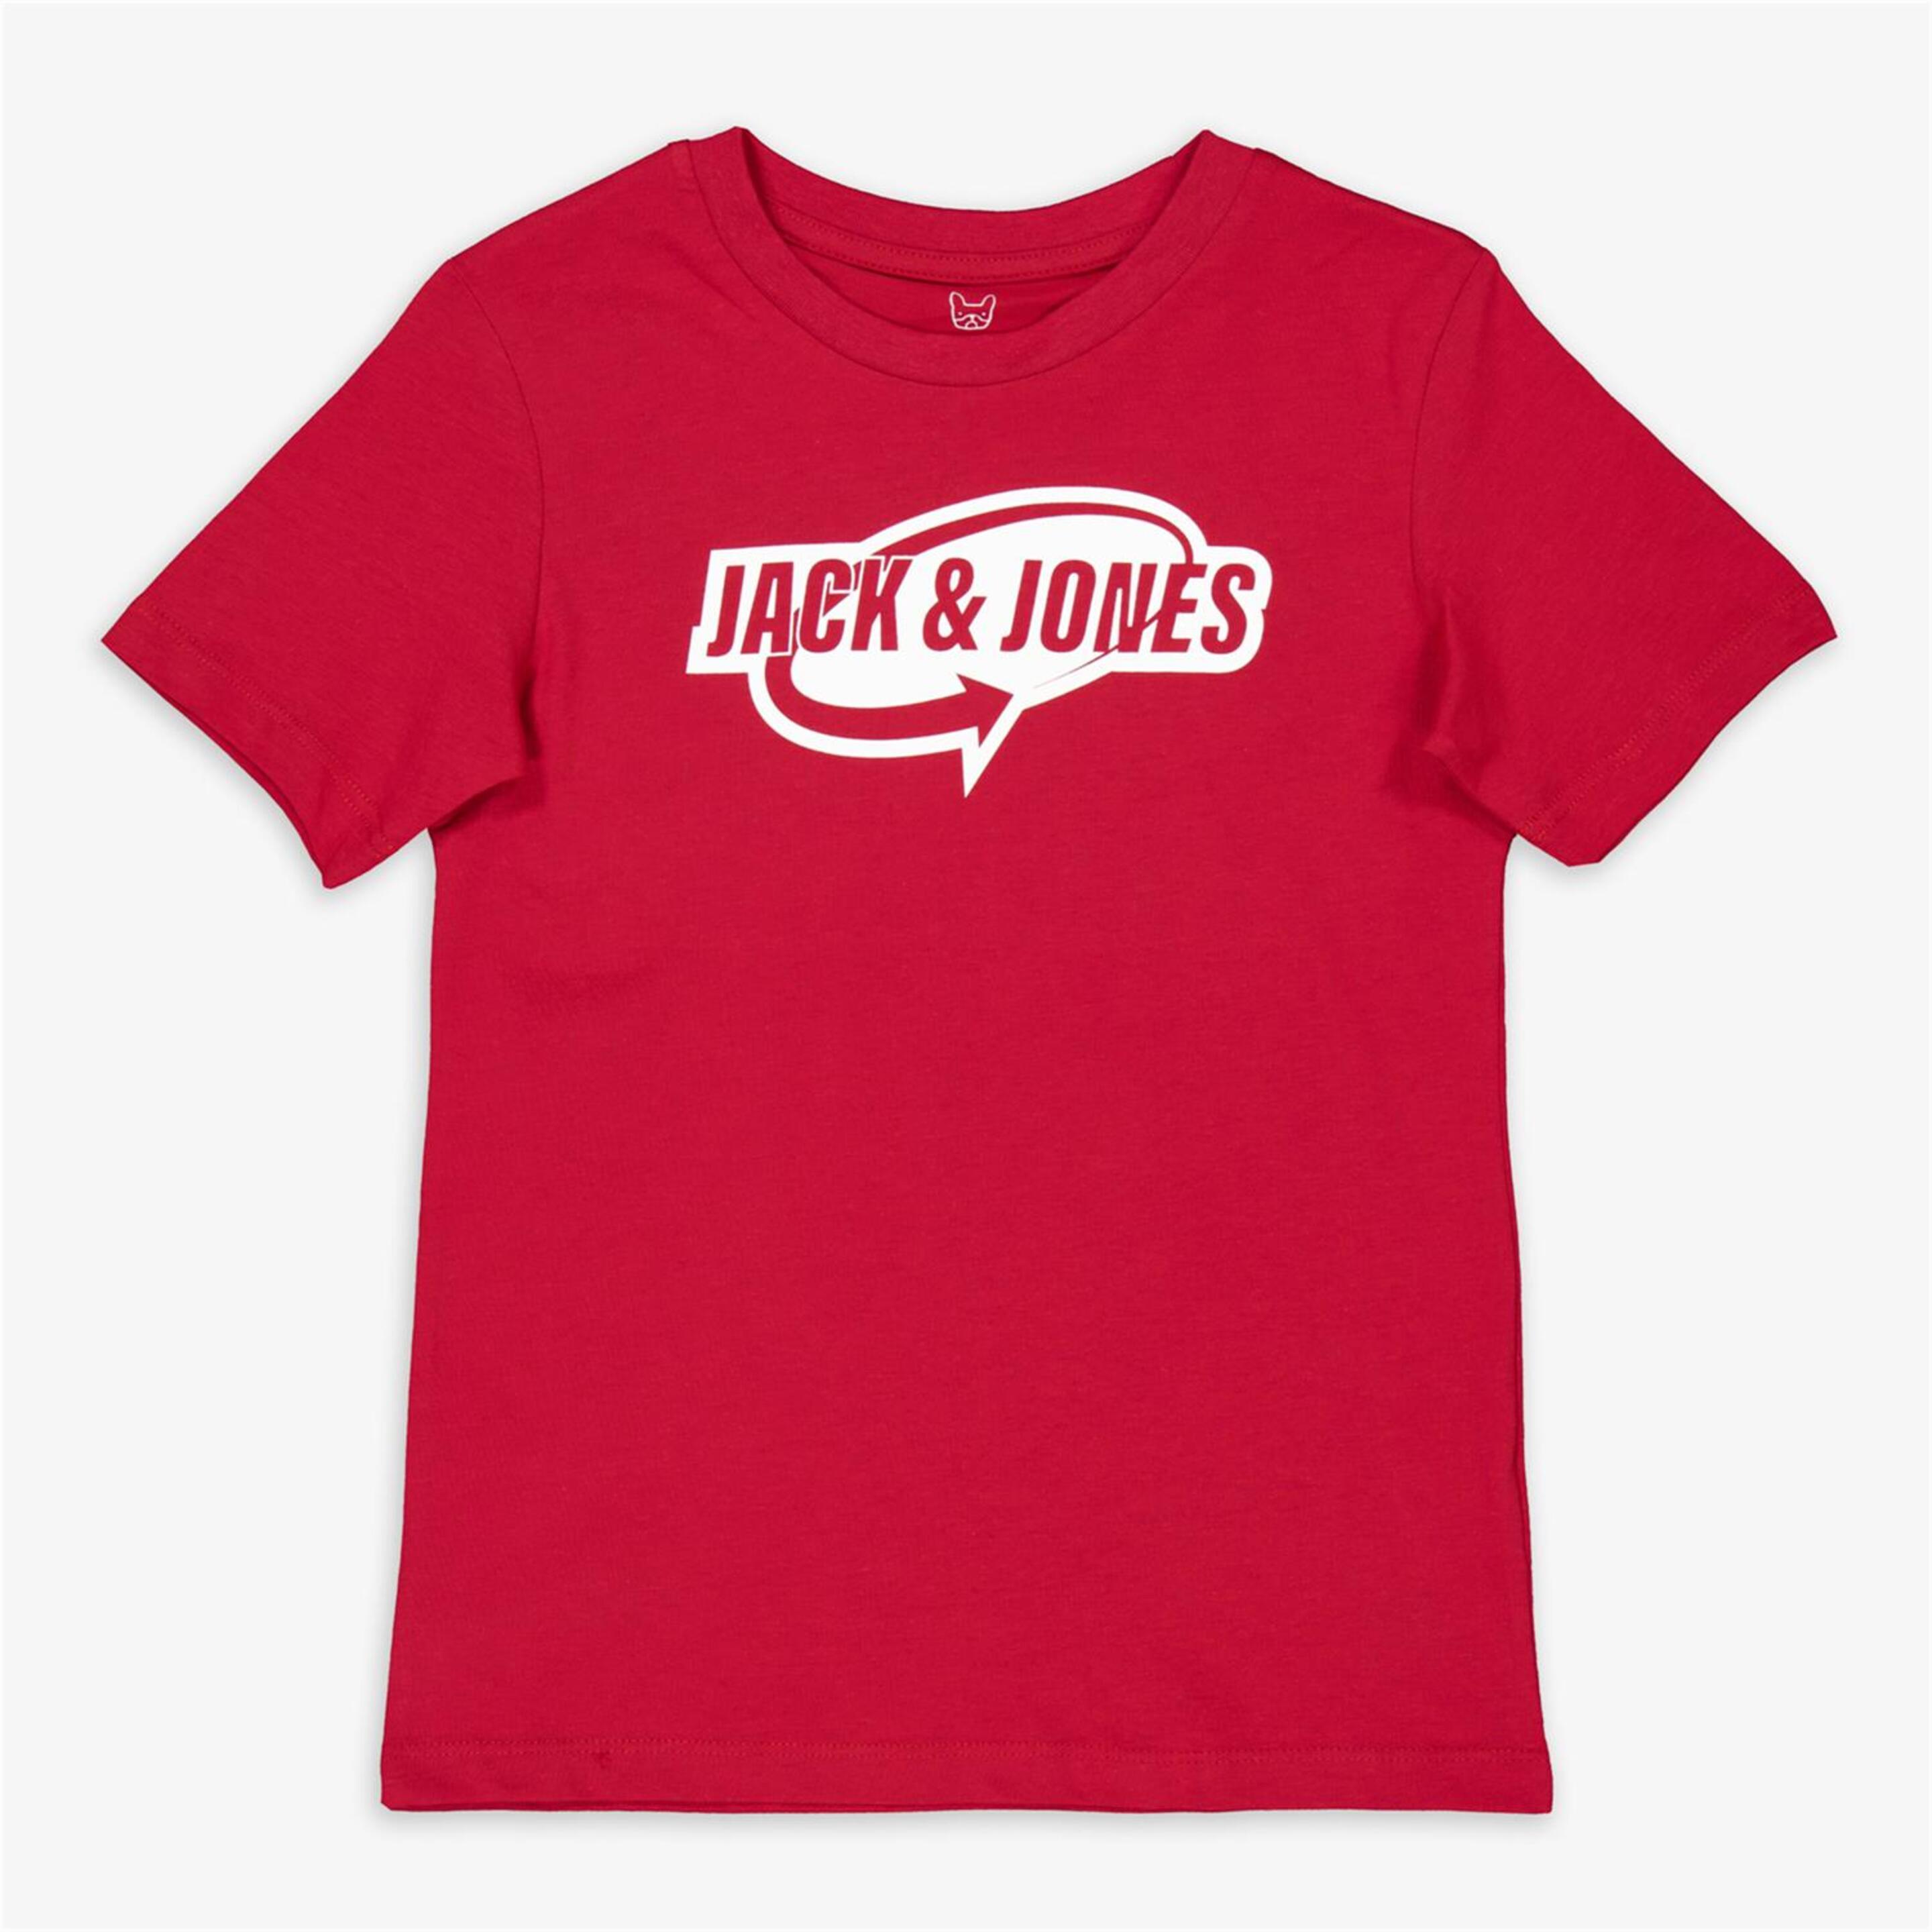 Jack & Jones - rojo - T-shirt Rapaz